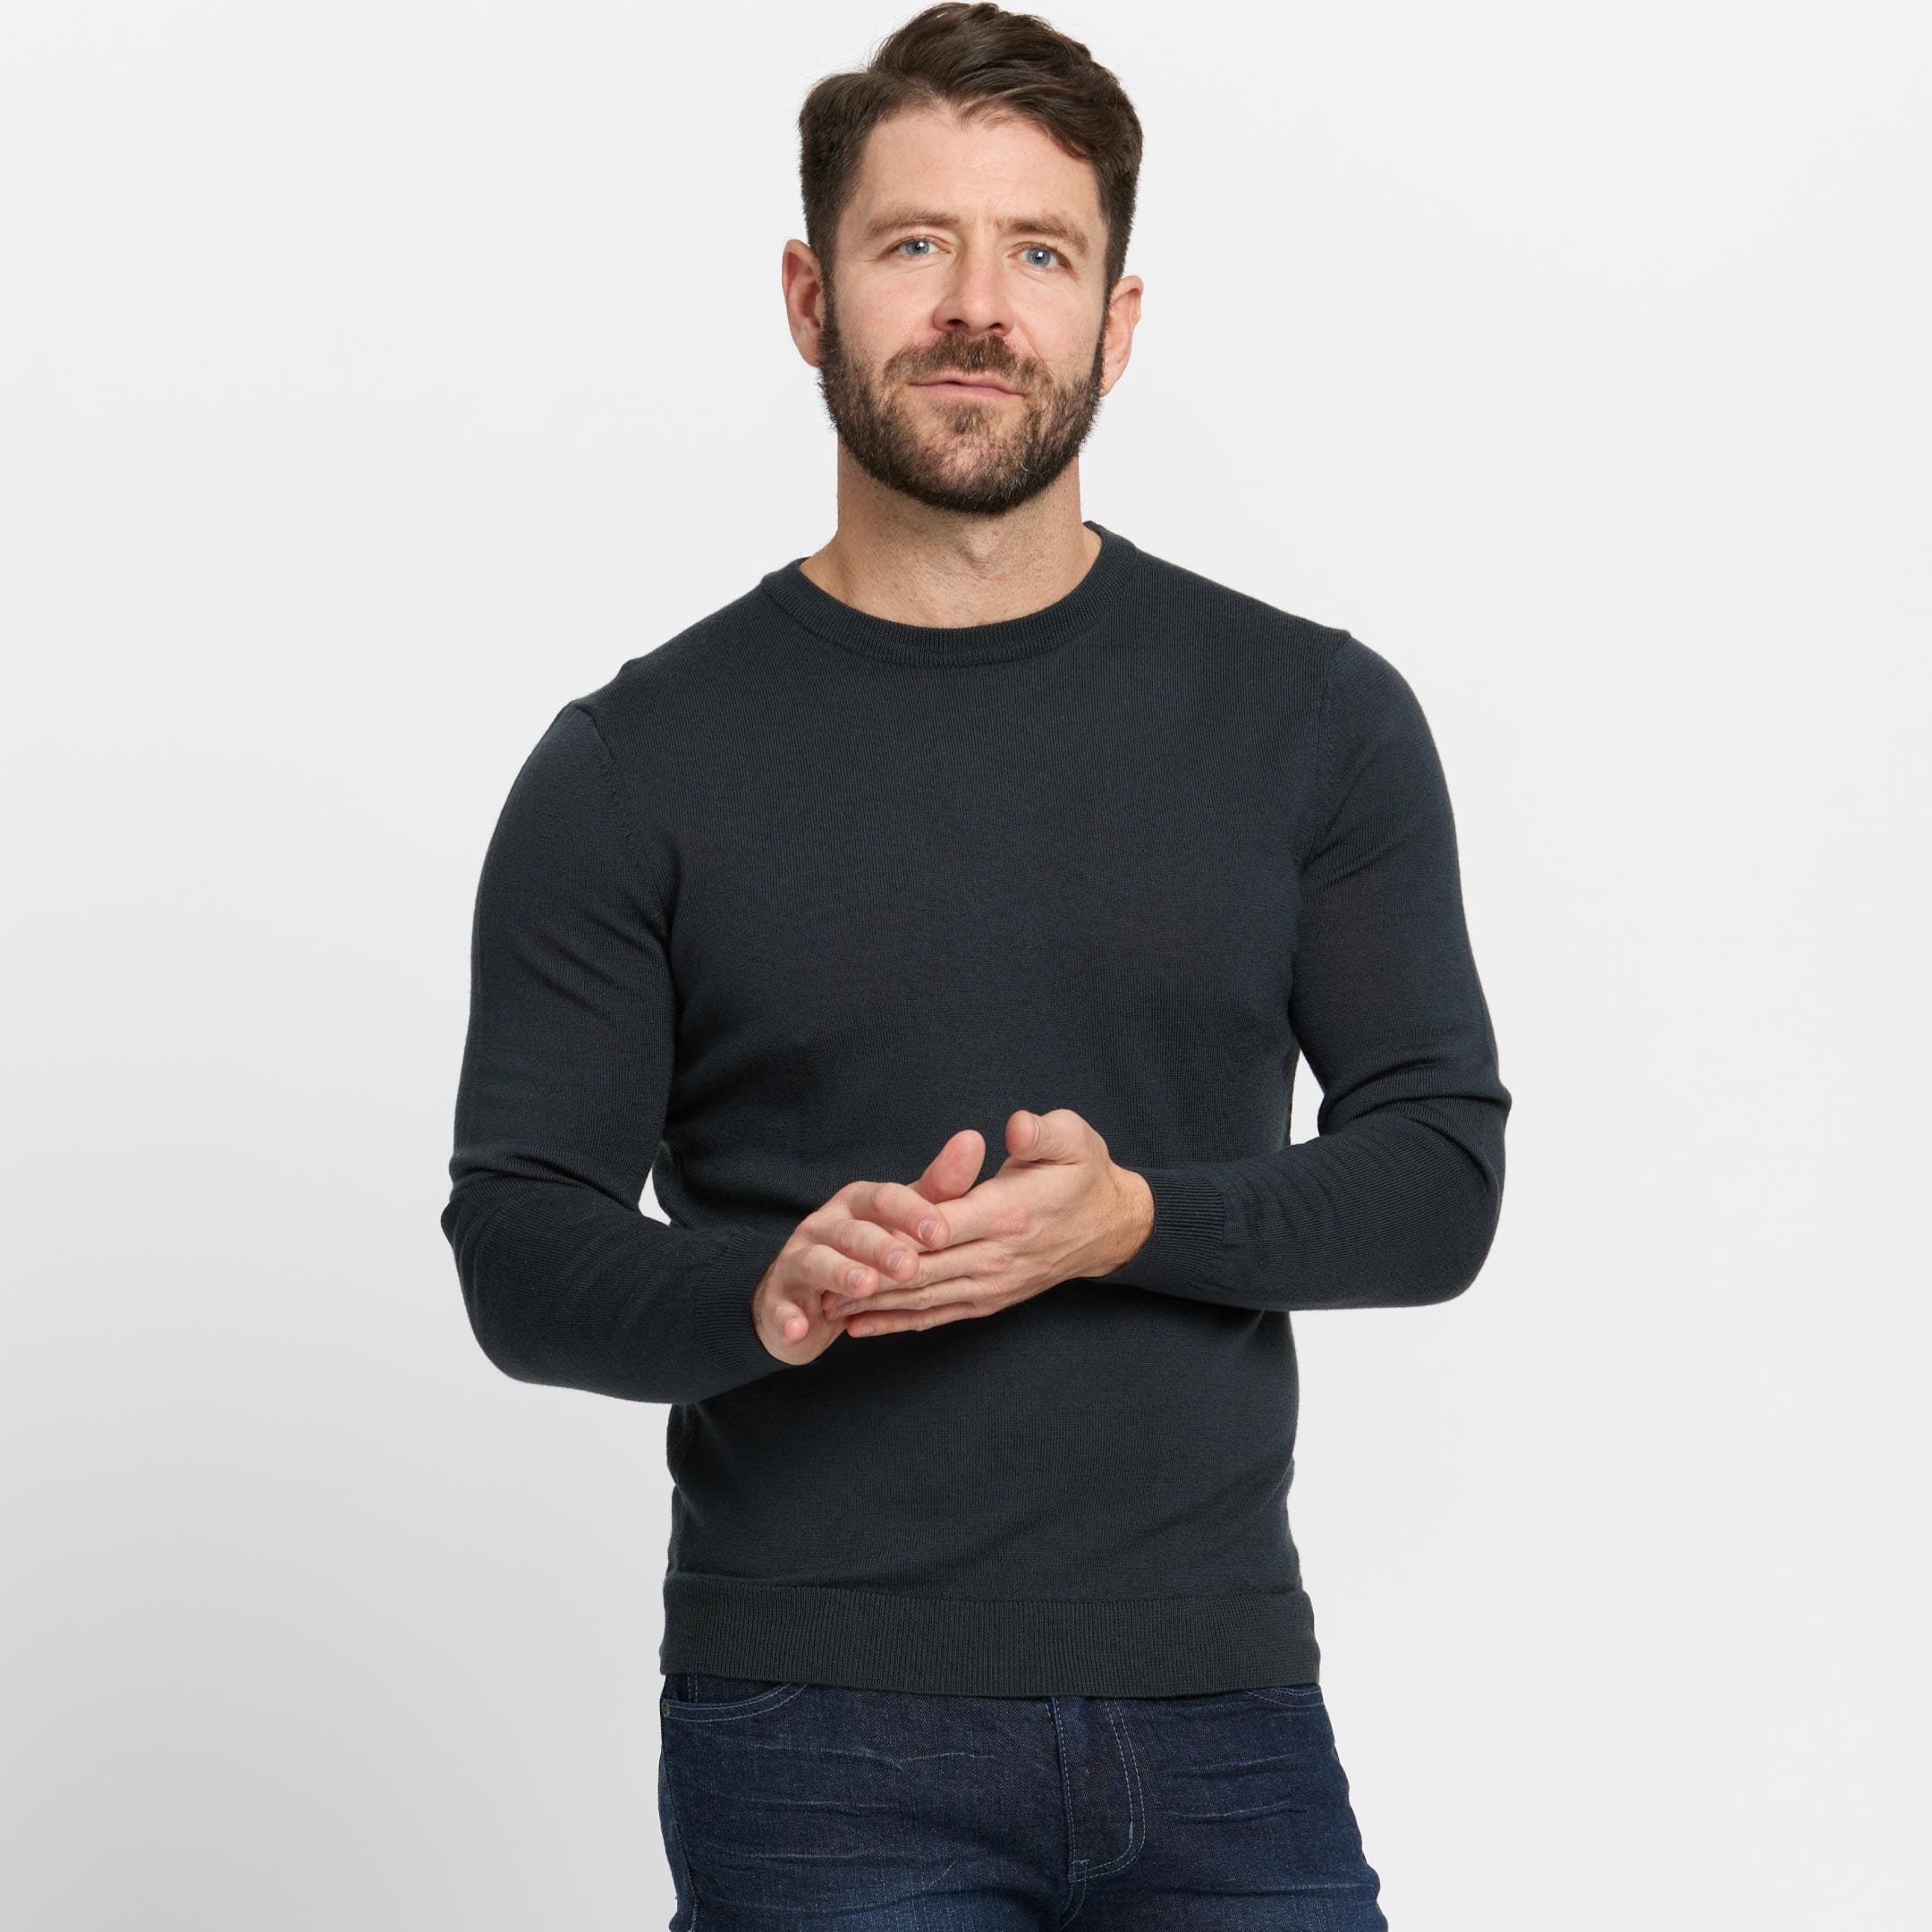 Buy Charcoal Merino Crew-Neck Sweater for Short Men | Ash & Erie   Merino Wool Sweater